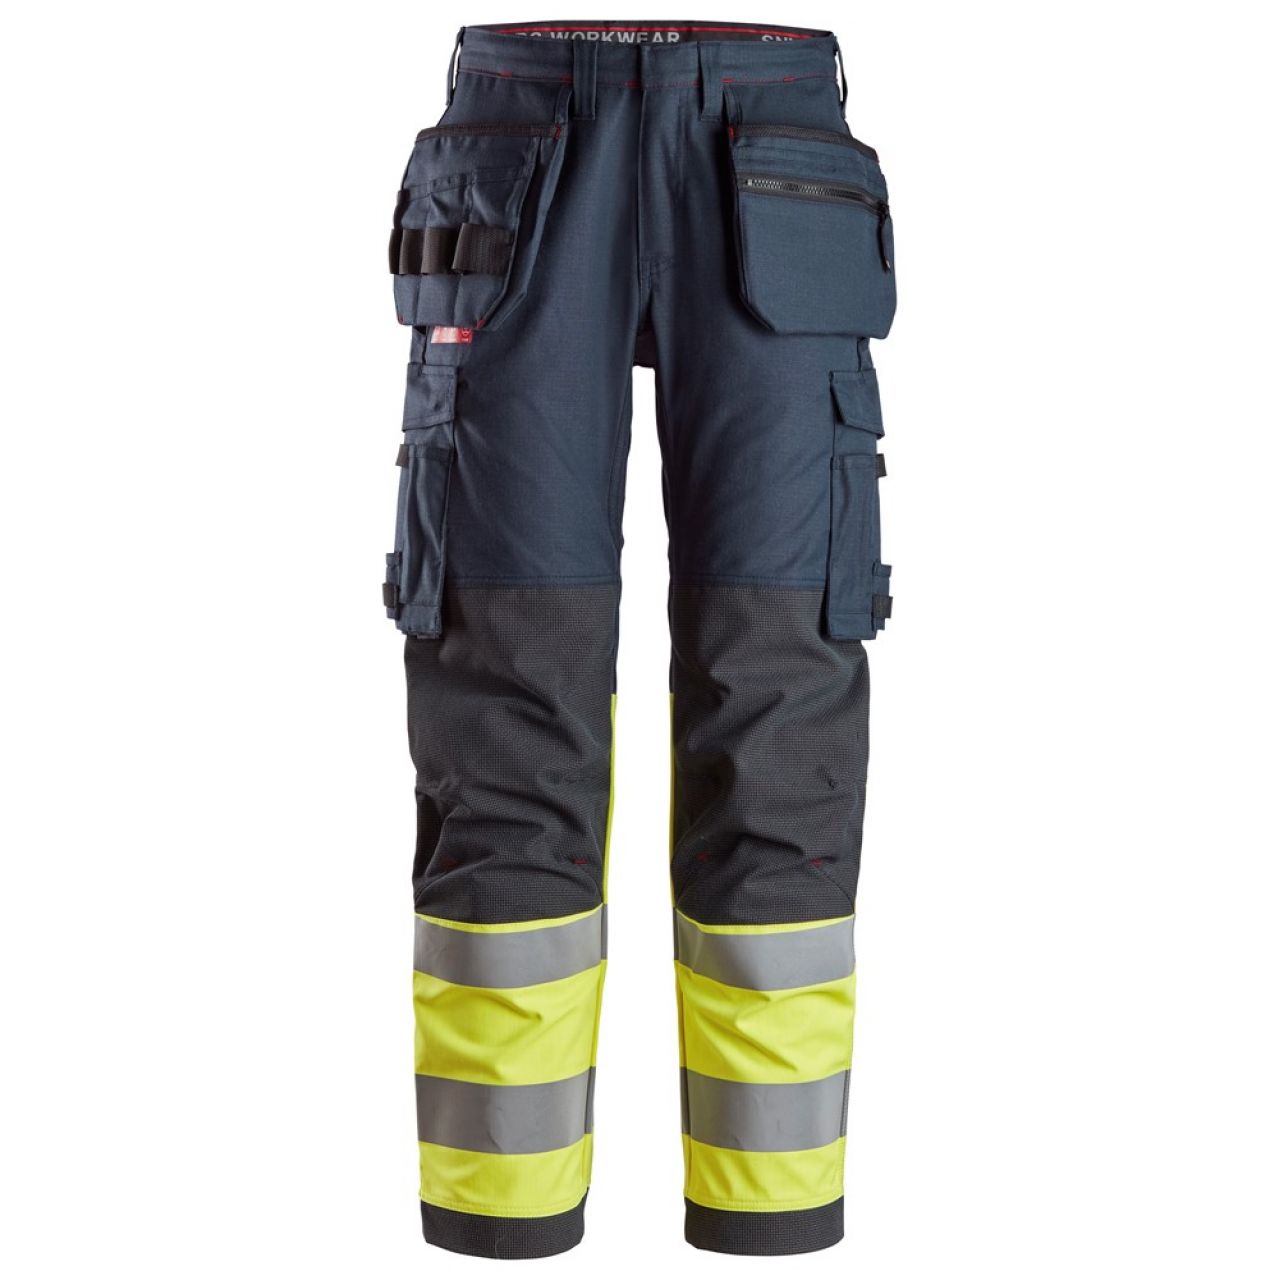 6263 Pantalones largos de trabajo de alta visibilidad clase 1 con bolsillos flotantes ProtecWork azul marino-amarillo talla 120